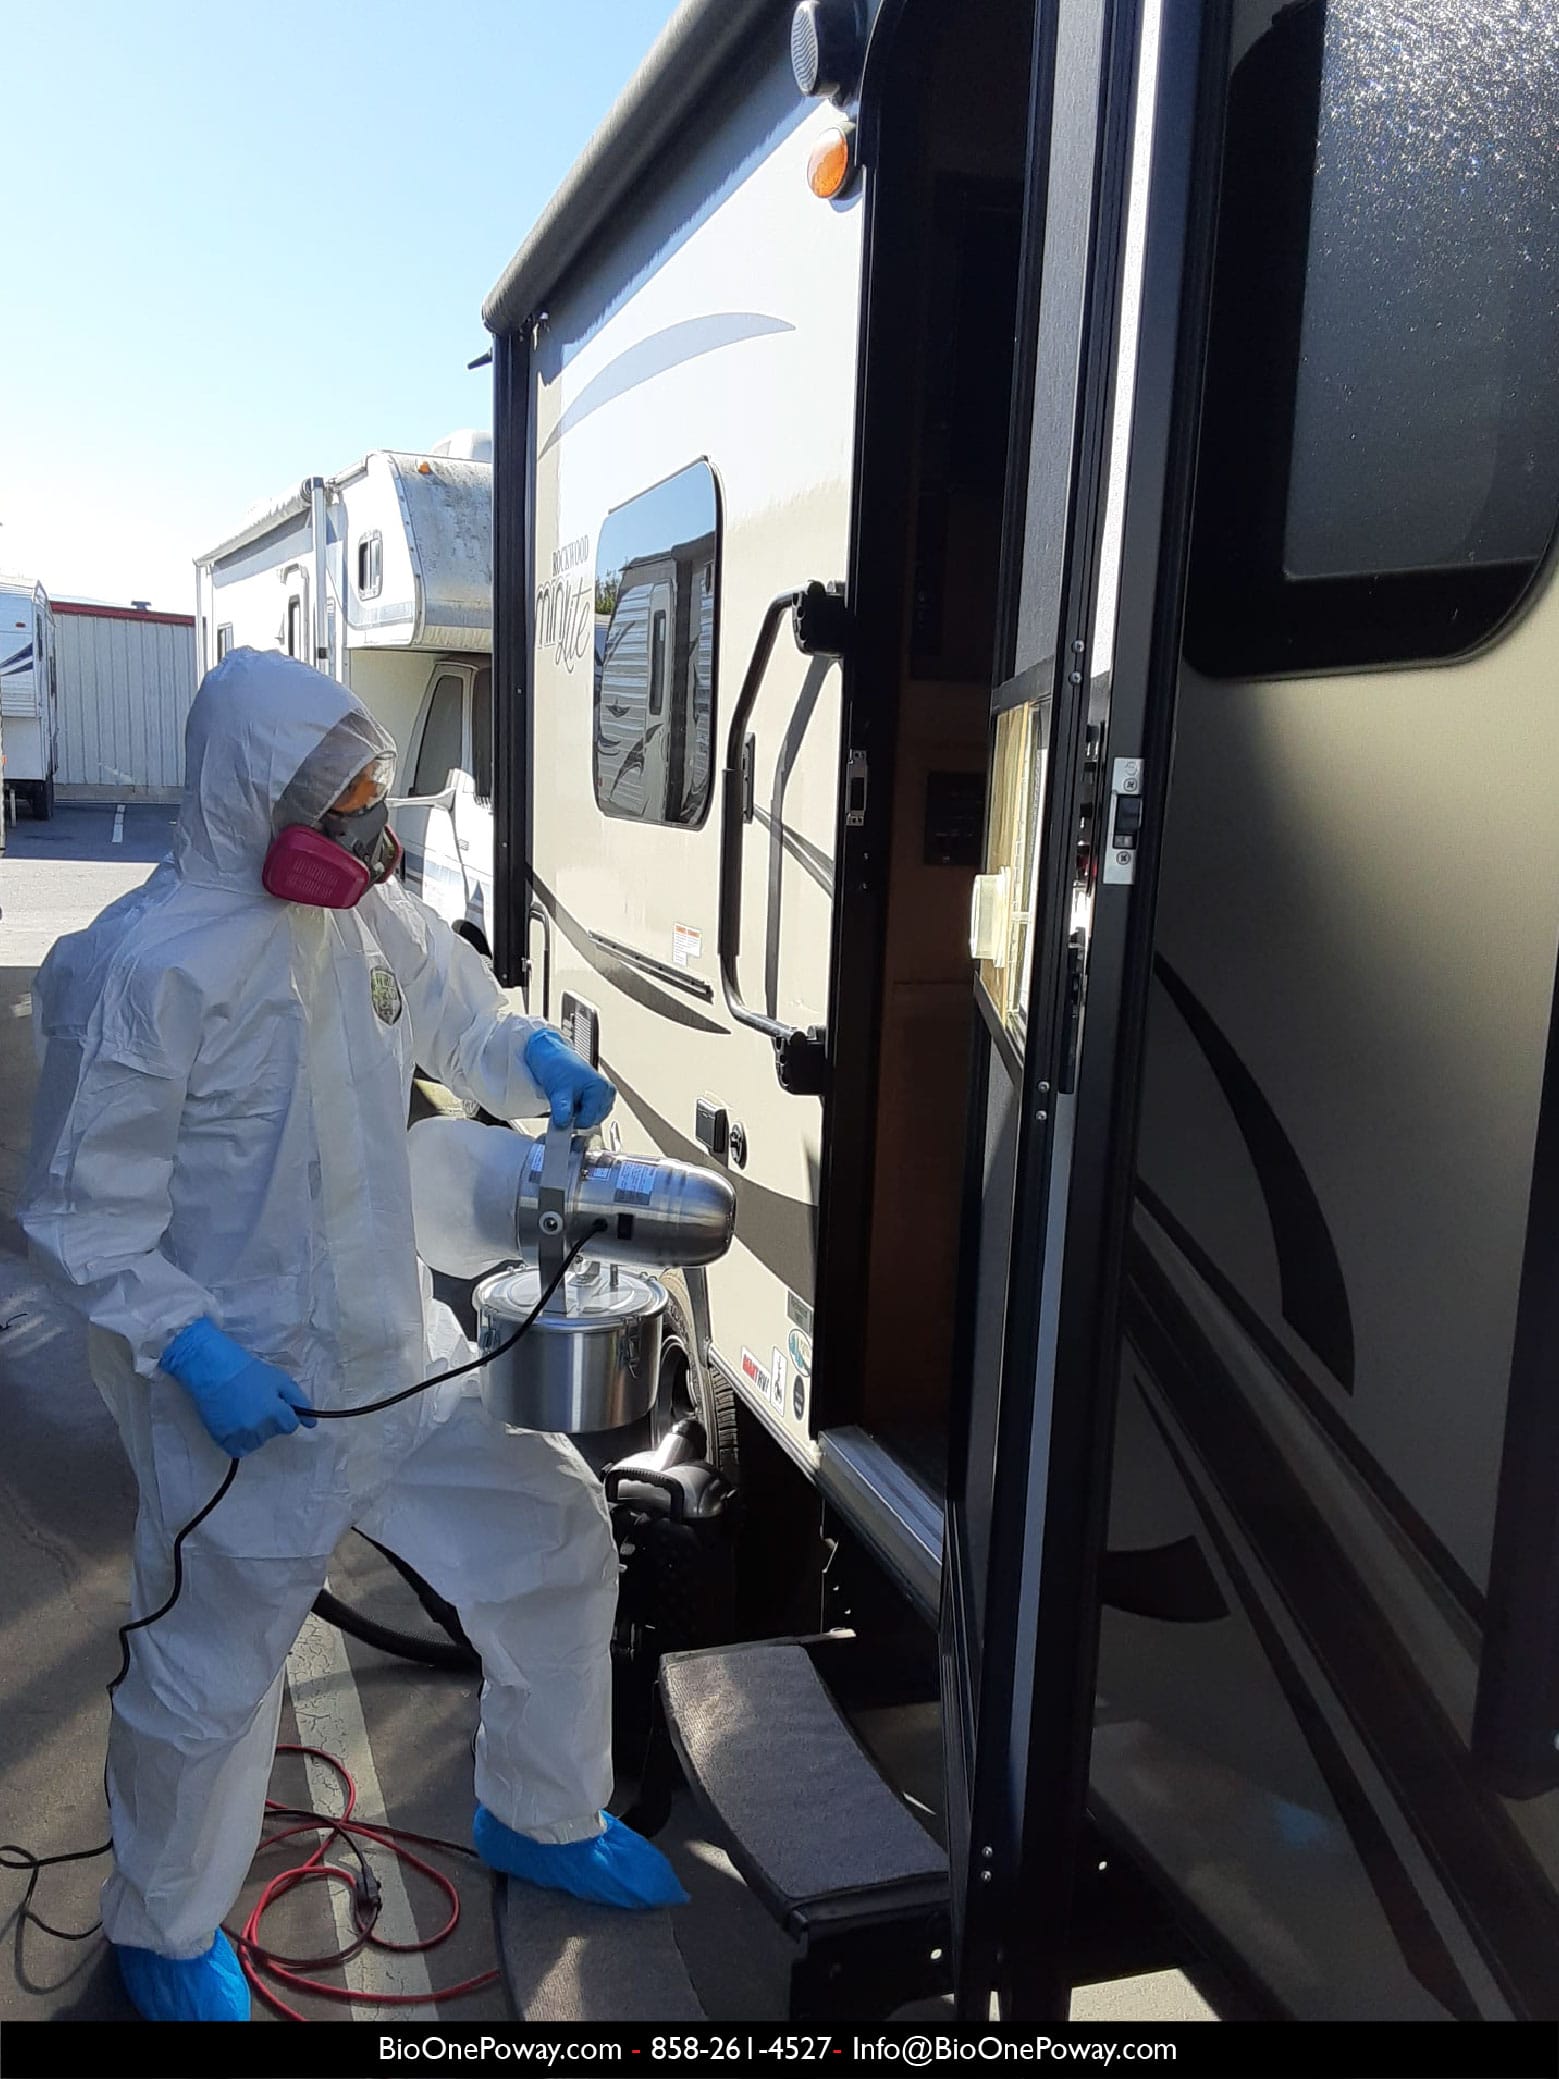 Bio-One technician disinfecting RV vehicle. Photo credit: Bio-One of Poway.